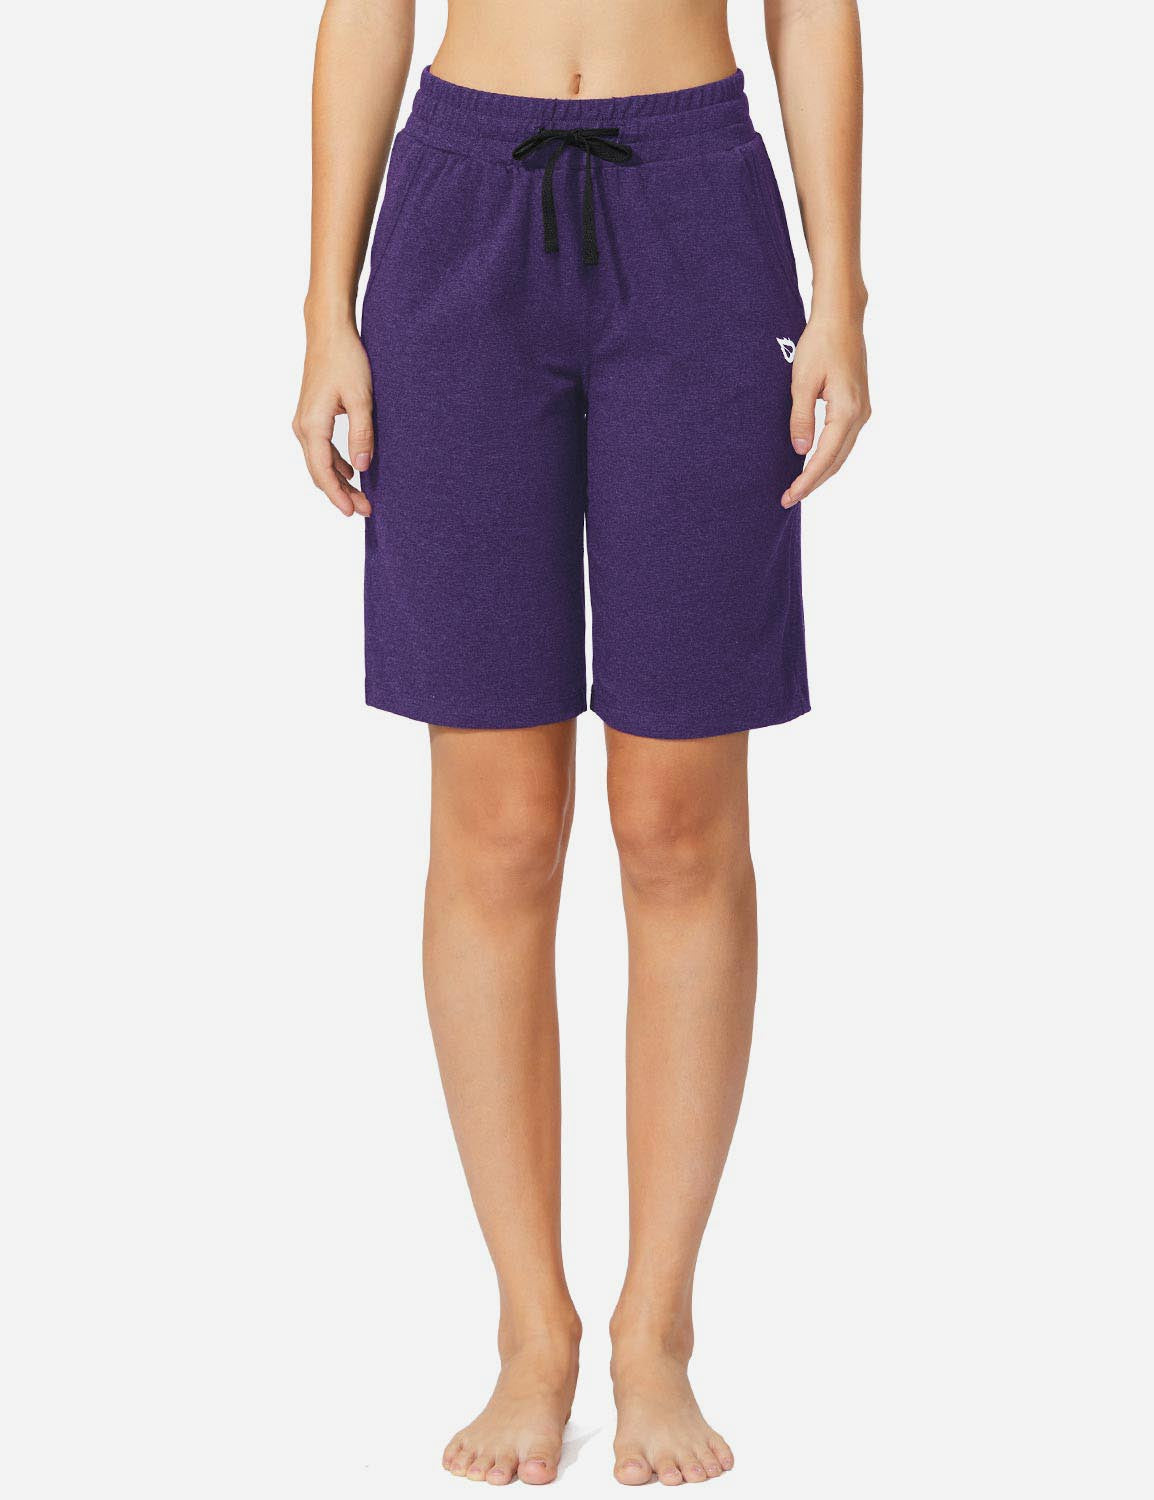 Baleaf Women's Mid-Rise Cotton Pocketed Bermuda Shorts abh104 Purple Heather Front